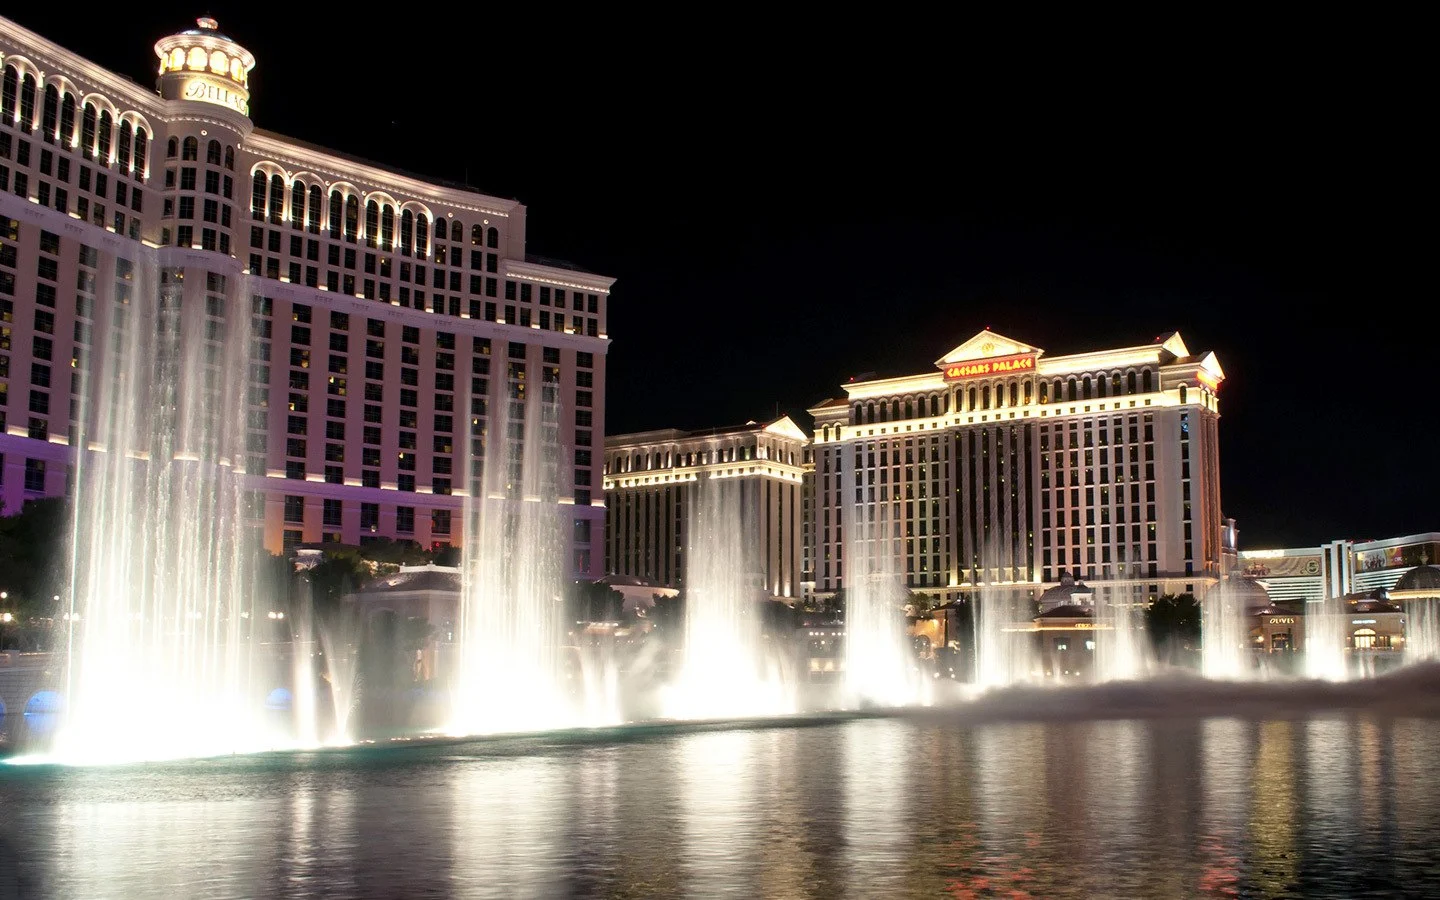 Fountains at the Bellagio casino in Las Vegas, Nevada USA